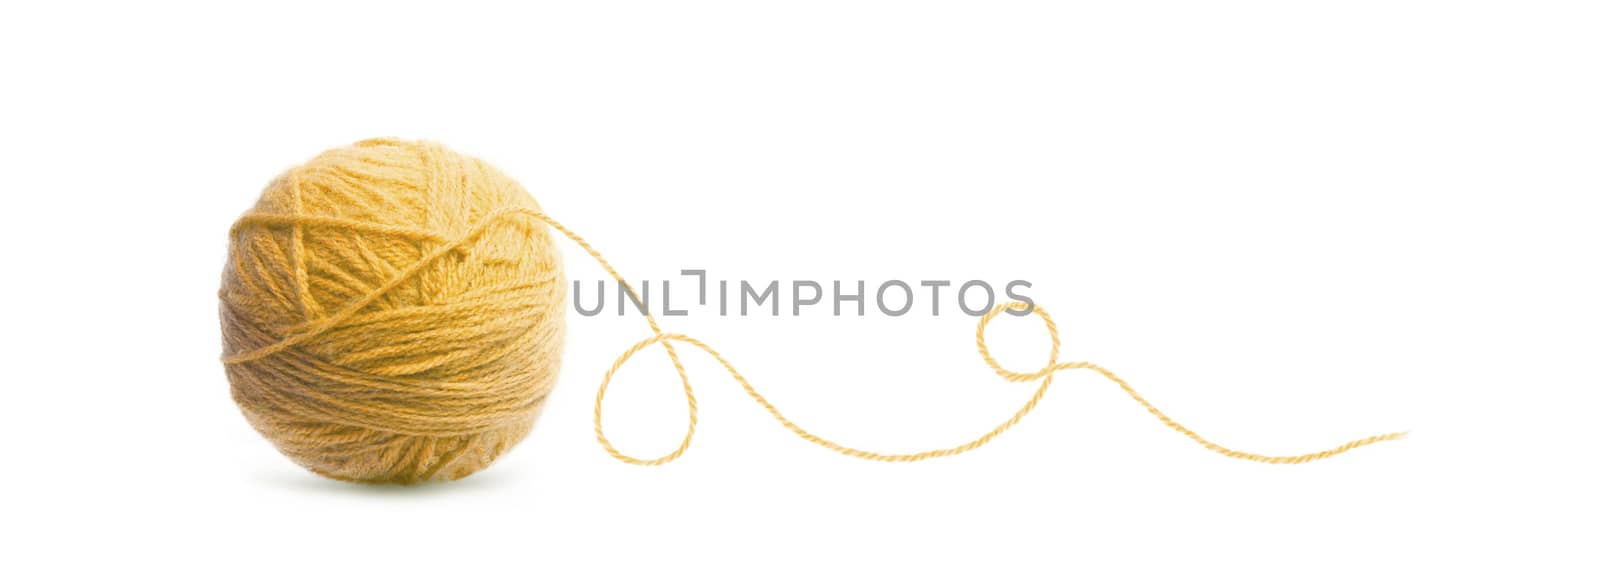 Orange ball of Threads wool yarn isolated on white background